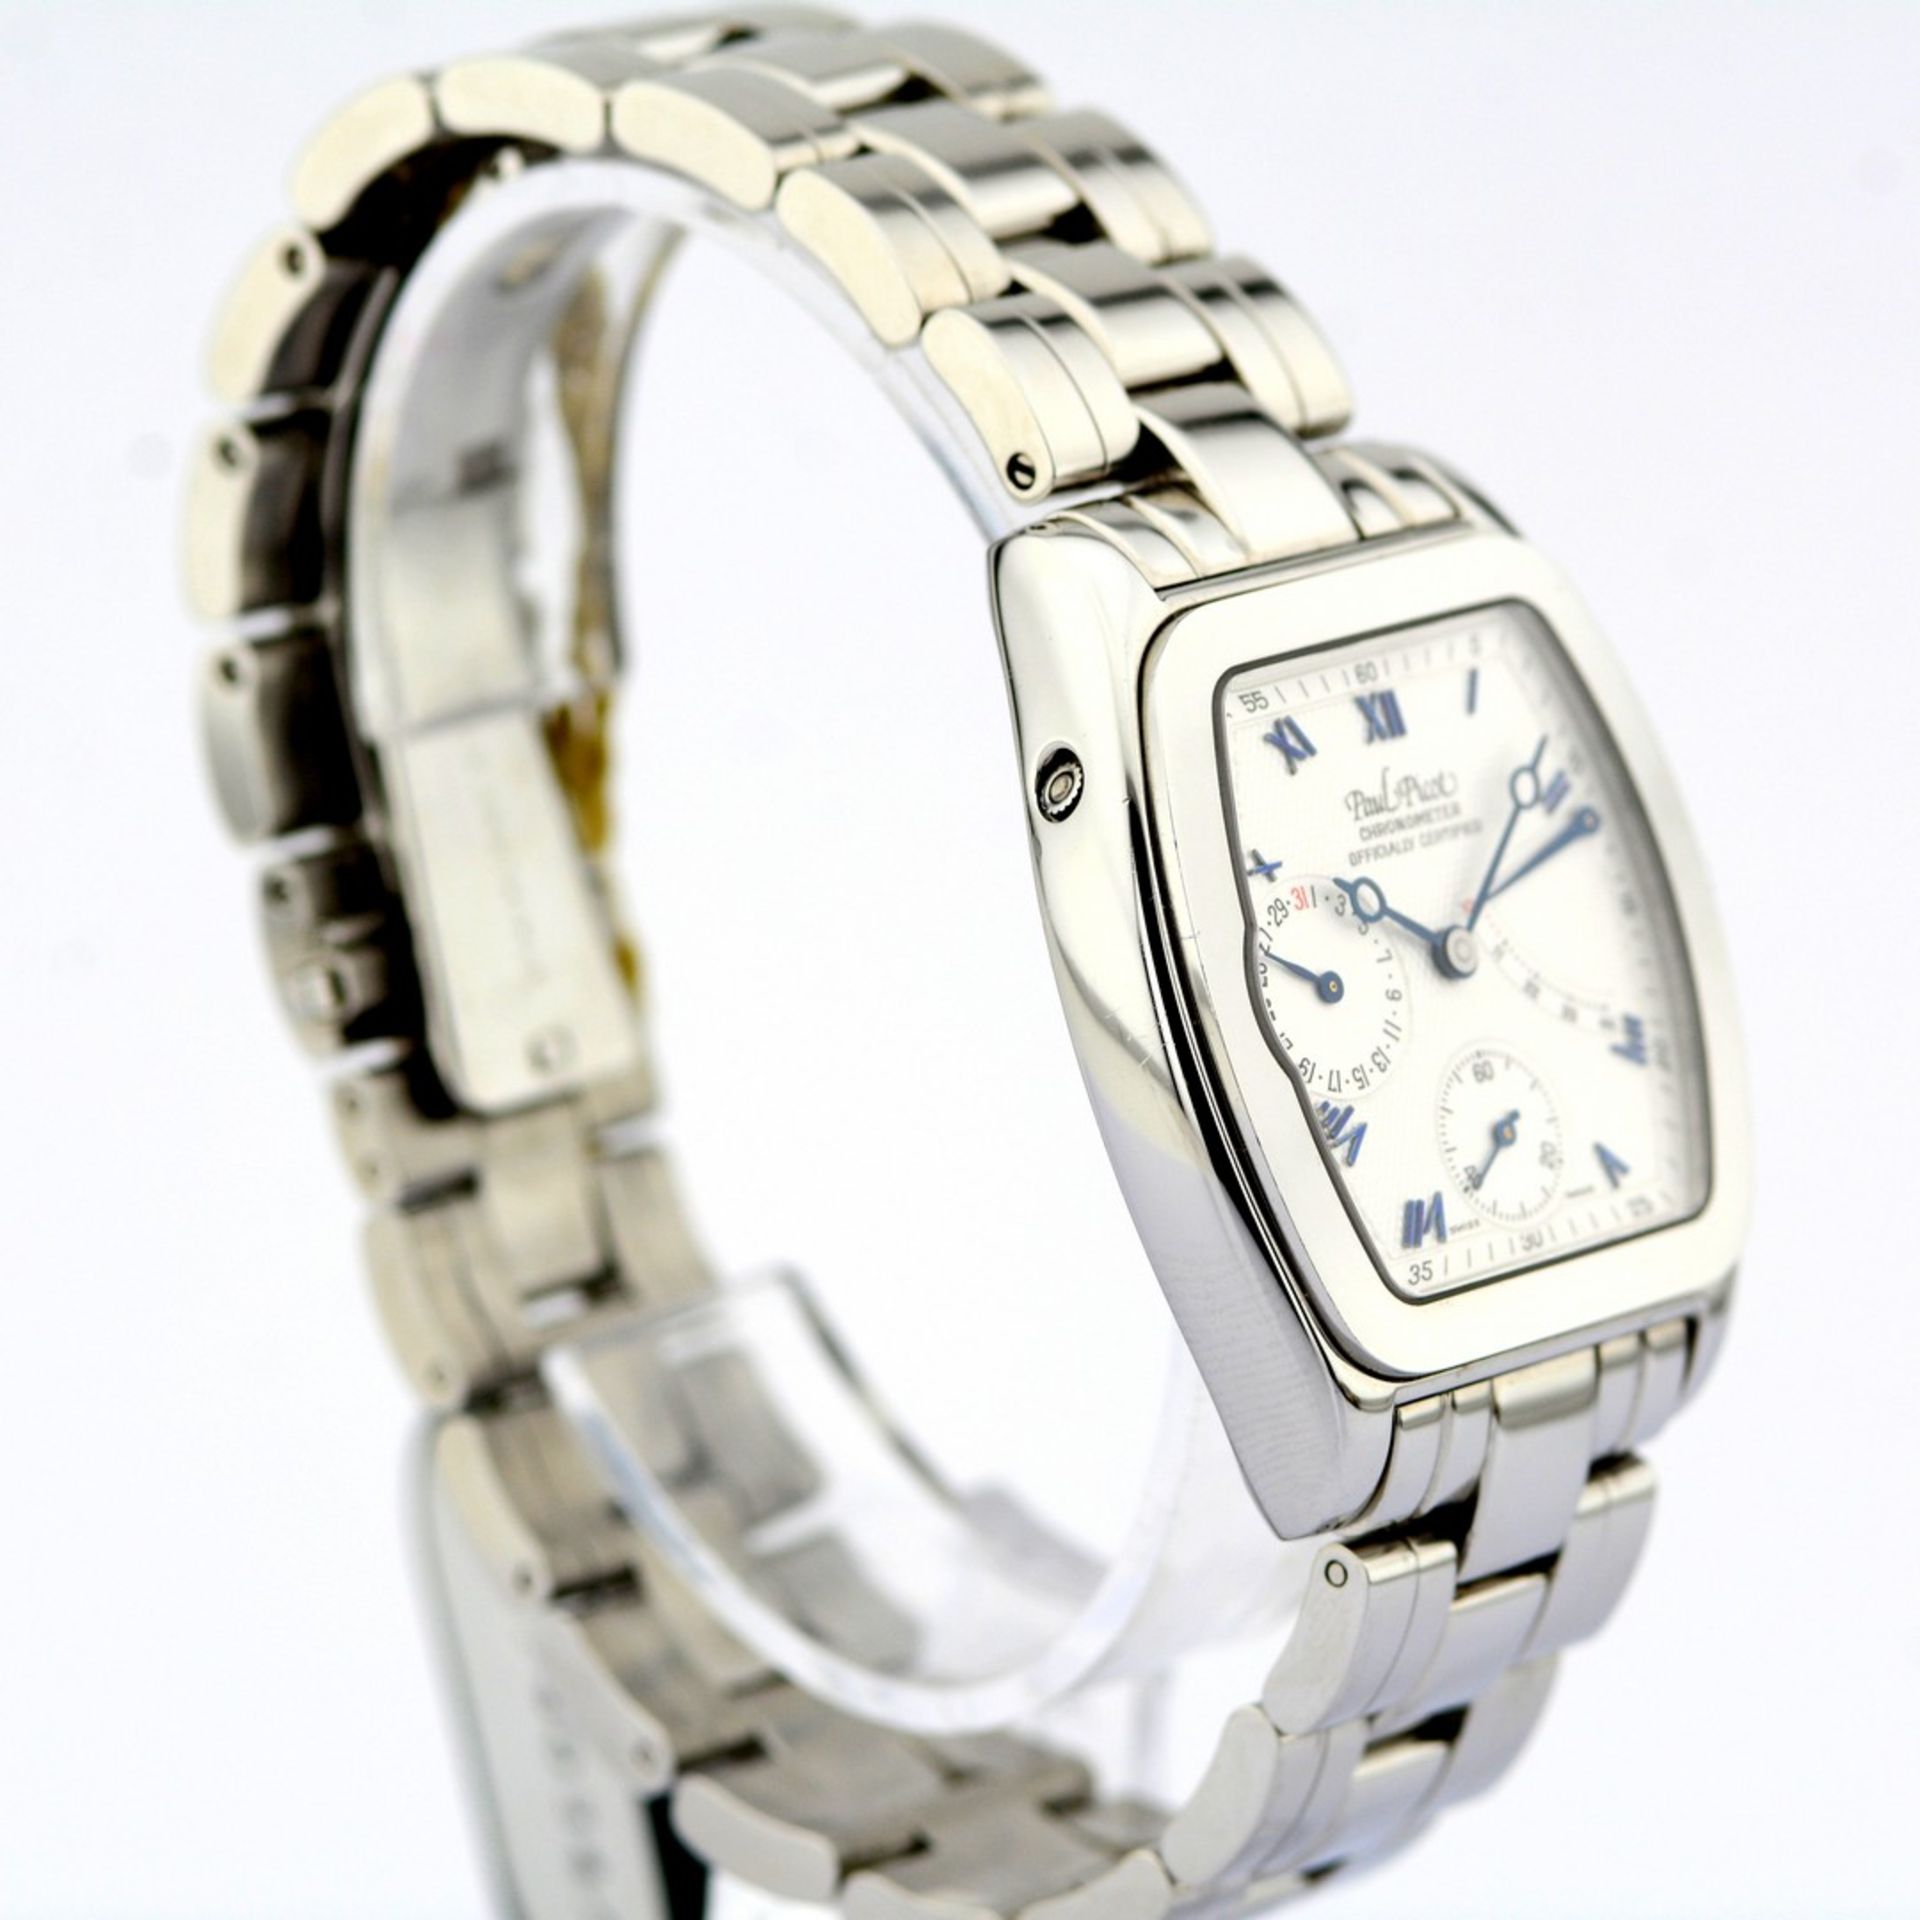 Paul Picot / Firshire Chronometer Reserve (NEW) - Gentlmen's Steel Wrist Watch - Image 4 of 6